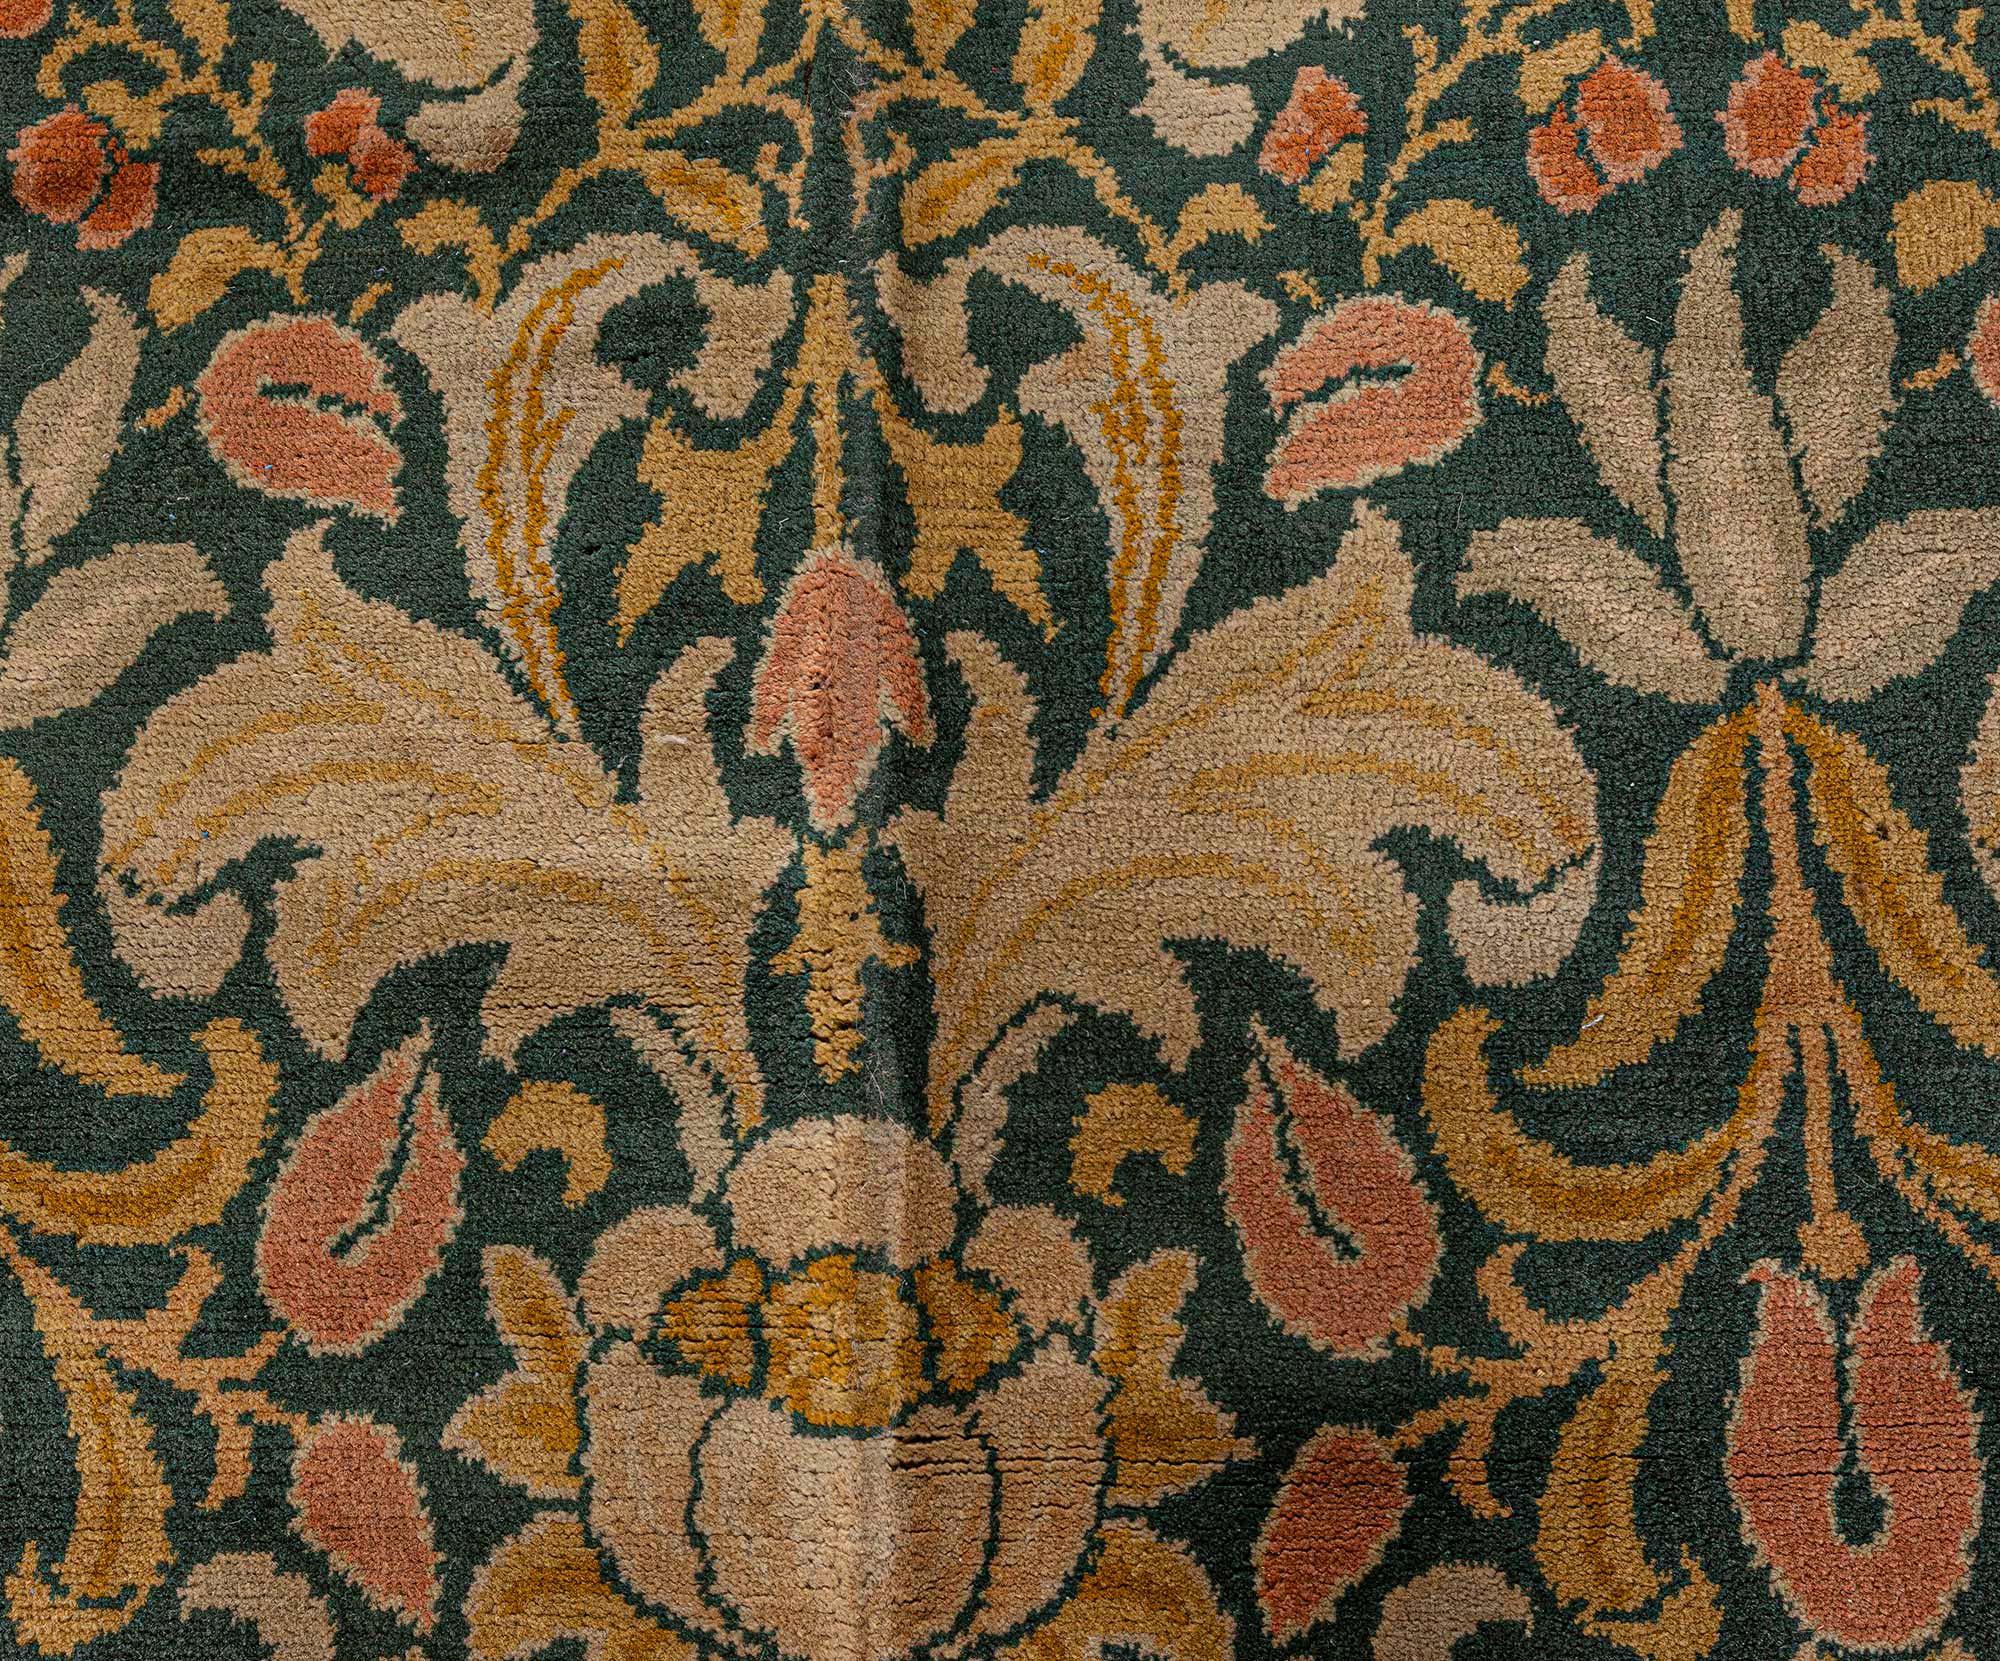 William Morris machine made English carpet Circa 1920
Size: 12'7